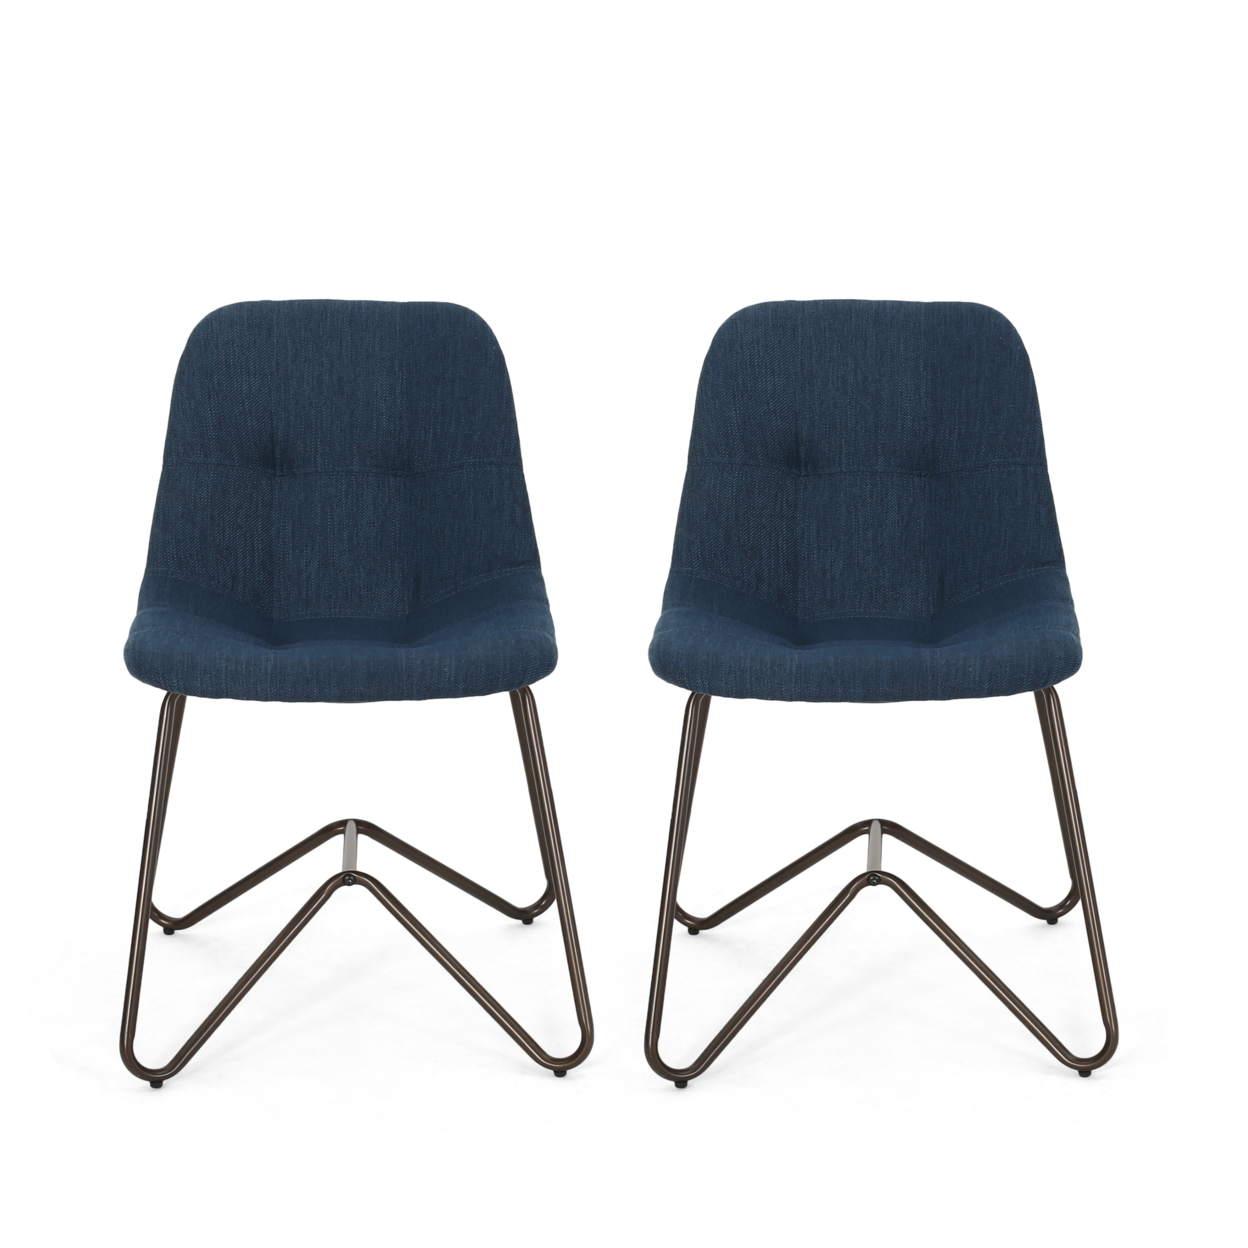 Adela Fabric Dining Chair - Navy Blue + Bronze